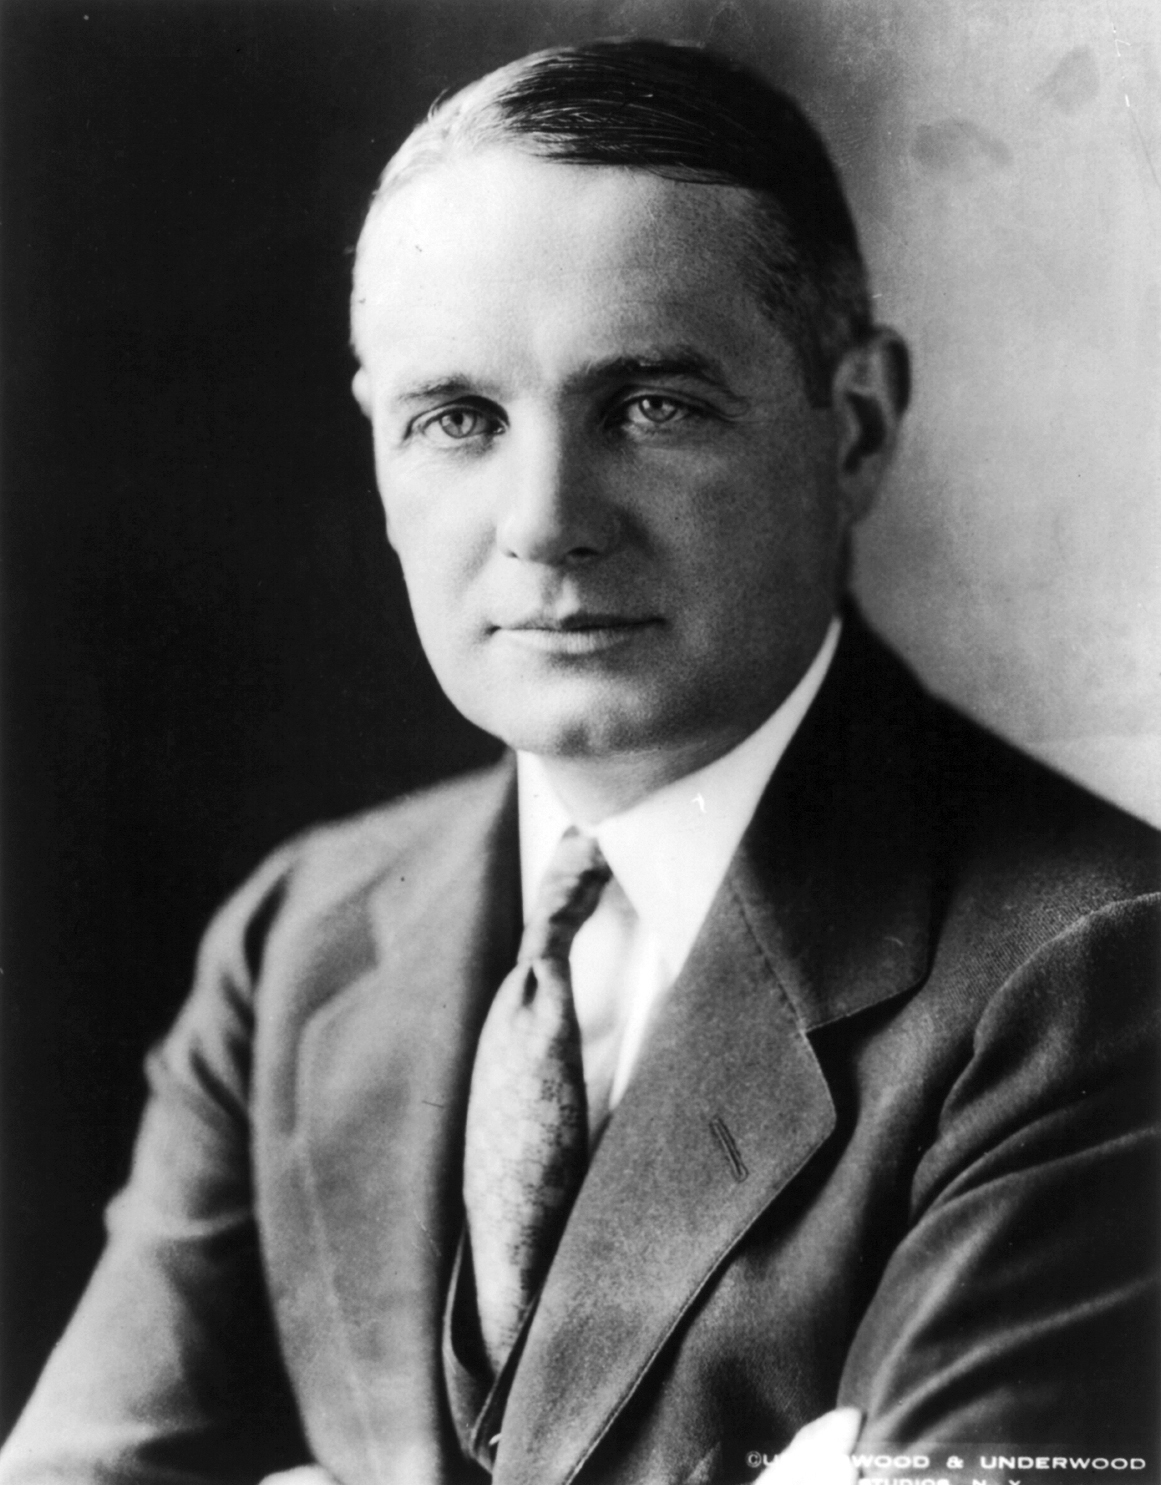 Portrait of William Donovan, 15 Aug 1924